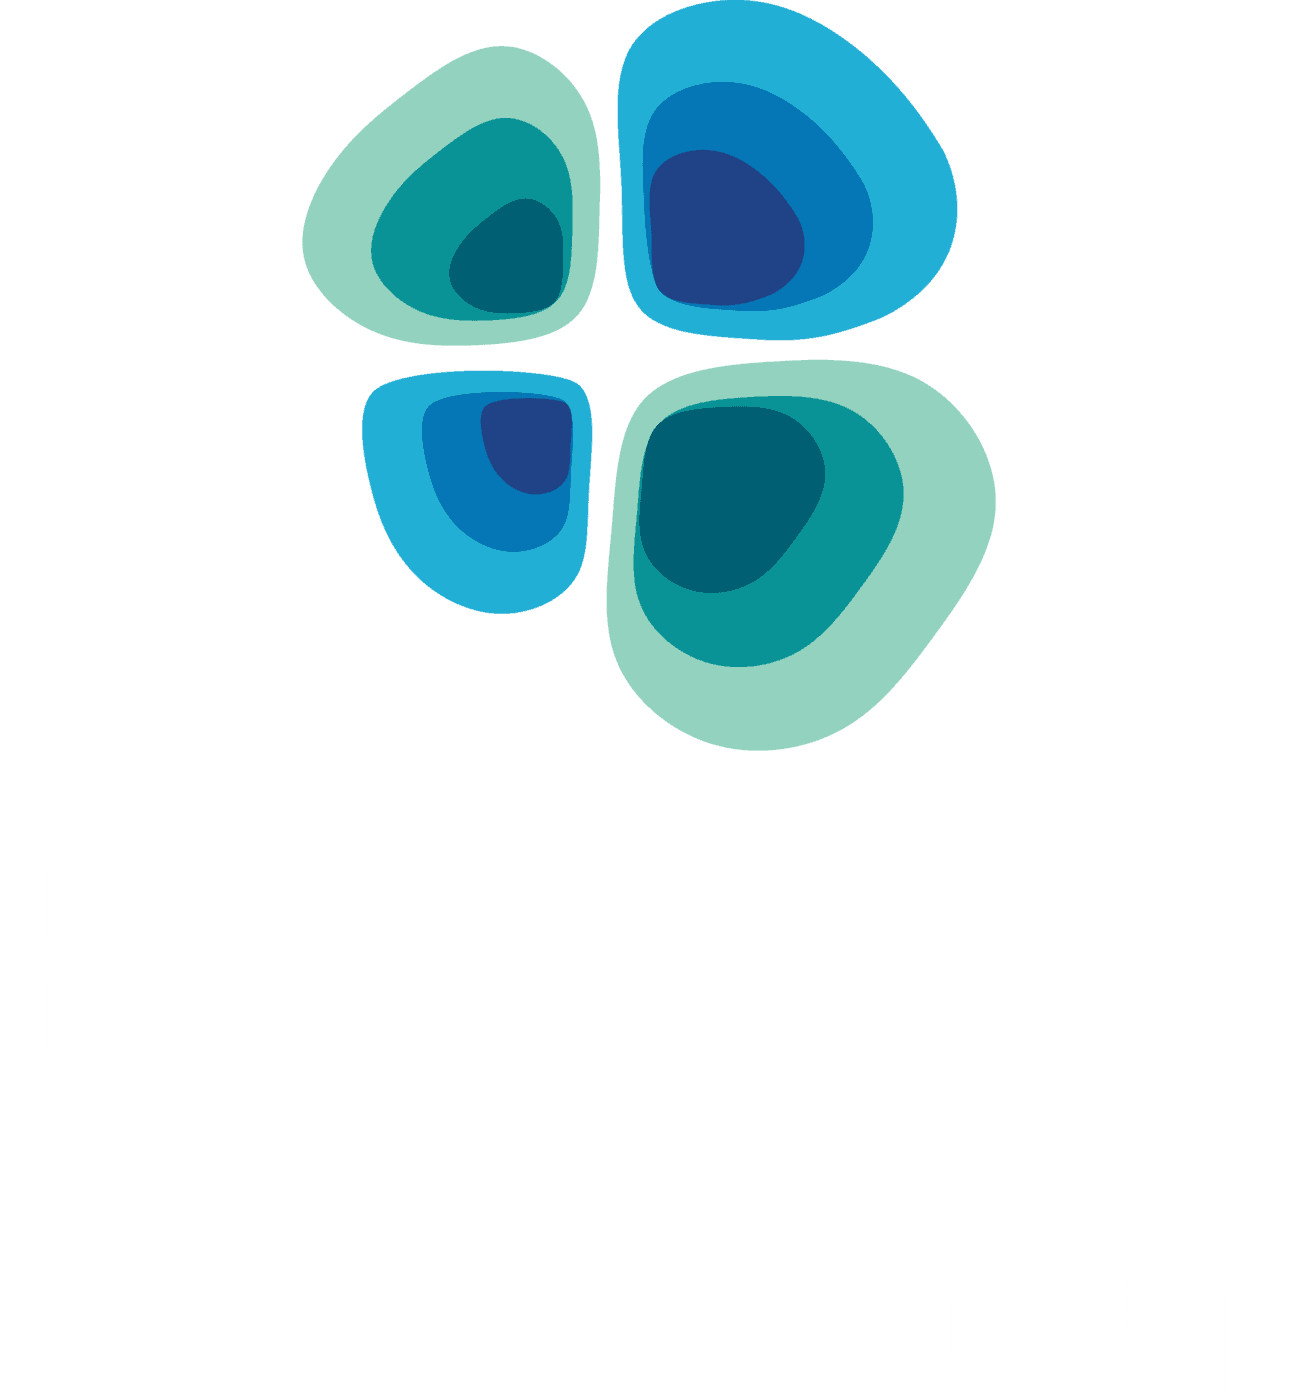 Baywell psychiatry group vertical lockup white rgb